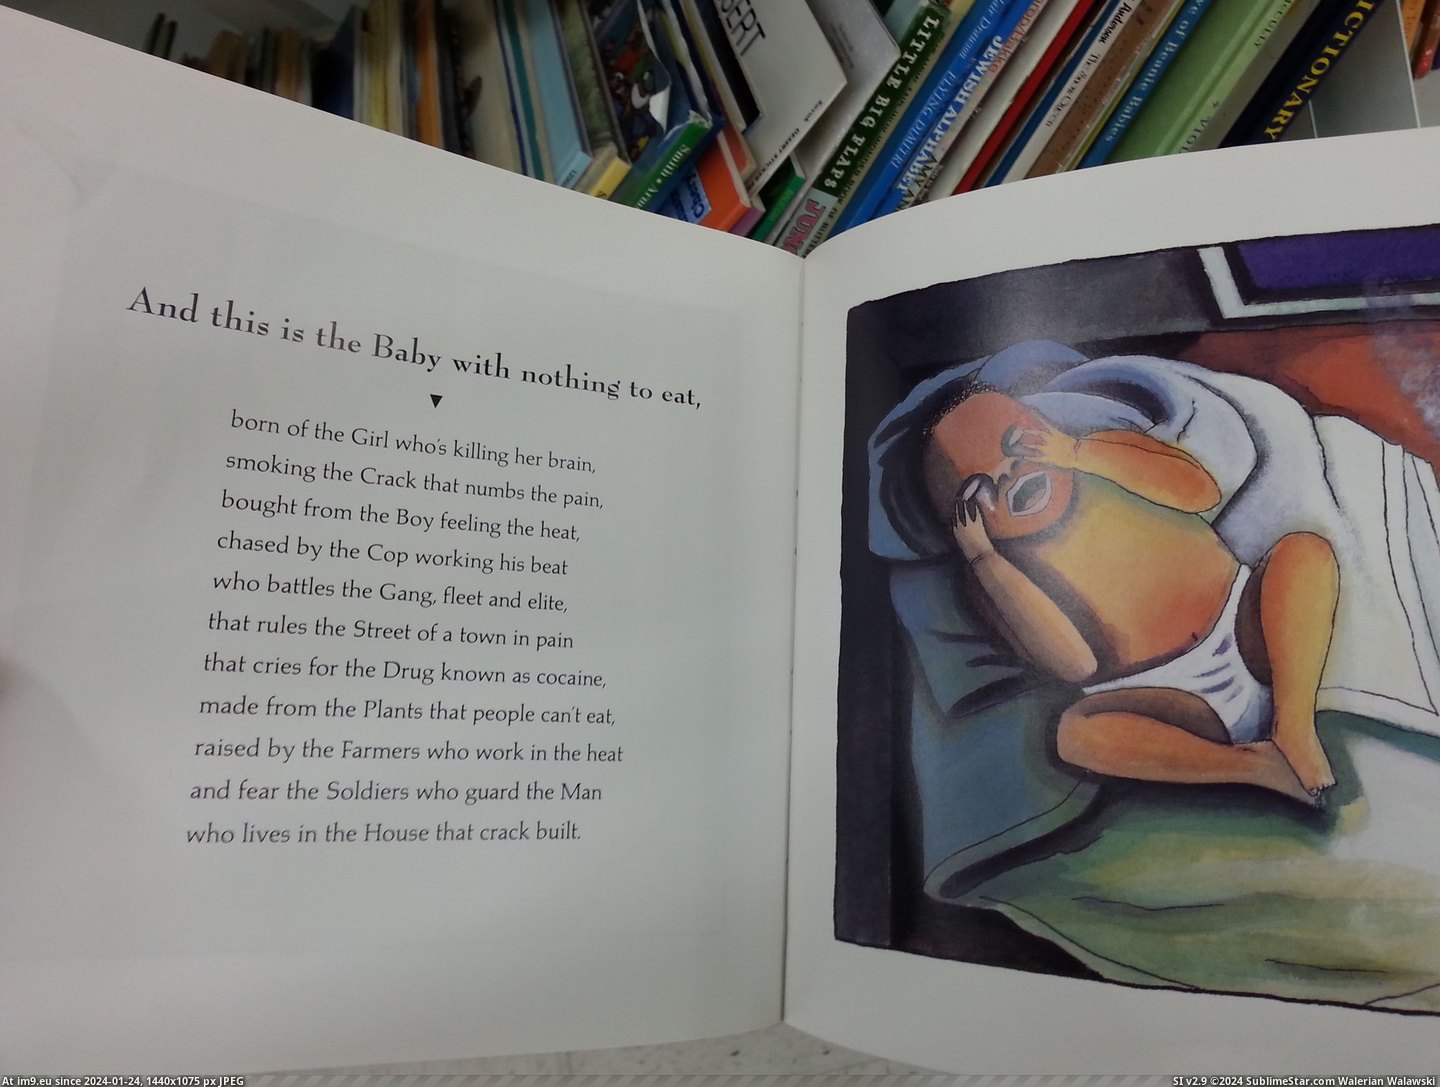 #Wtf #Store #Thrift #Crack #Book #Children [Wtf] Found this children's book about crack at a thrift store today 1 Pic. (Изображение из альбом My r/WTF favs))